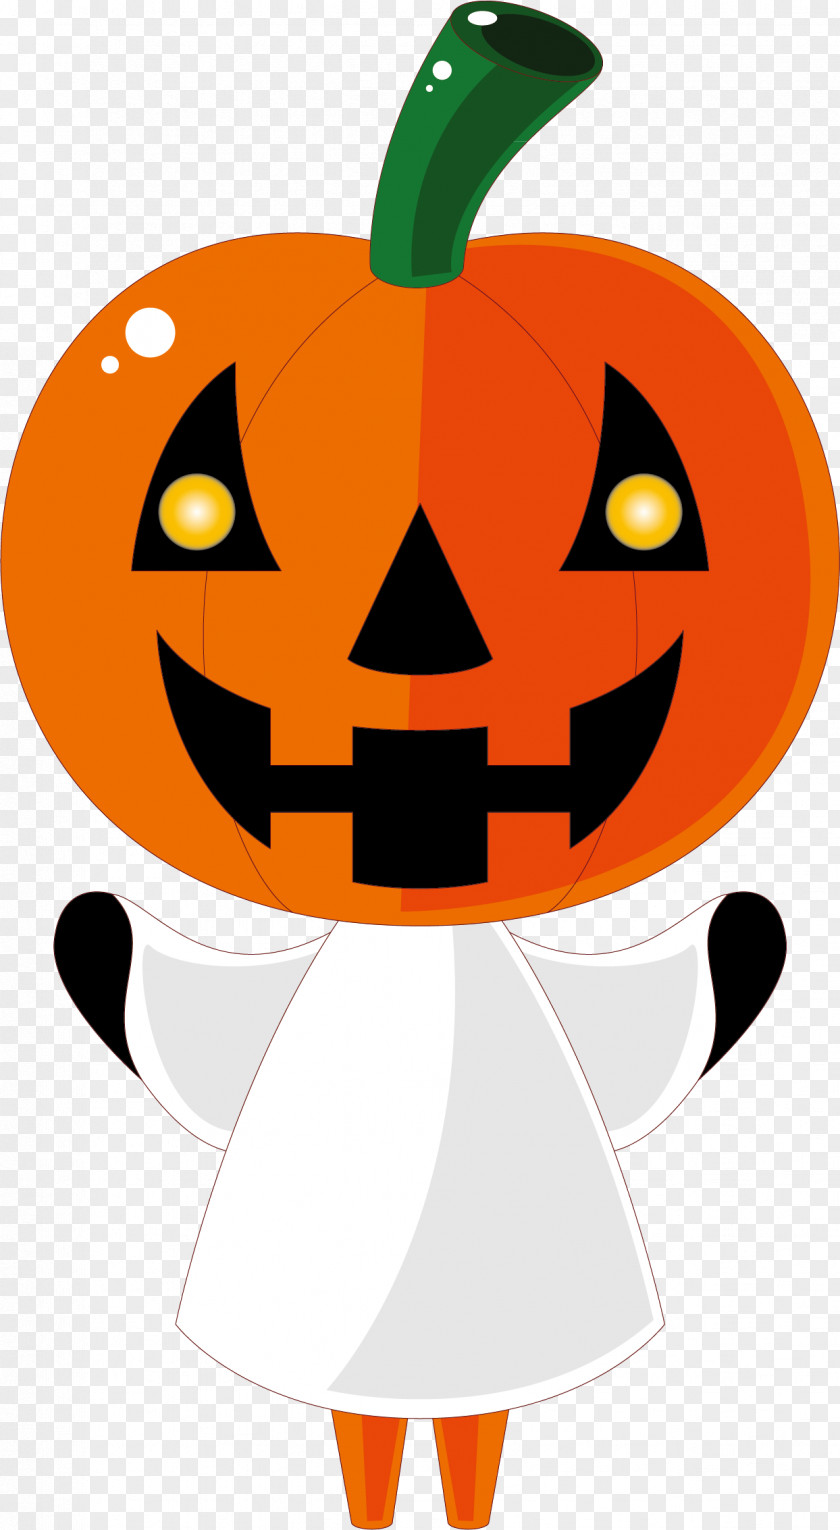 Vector Red Pumpkin Head Cartoon Children Jack-o-lantern Calabaza Halloween Illustration PNG